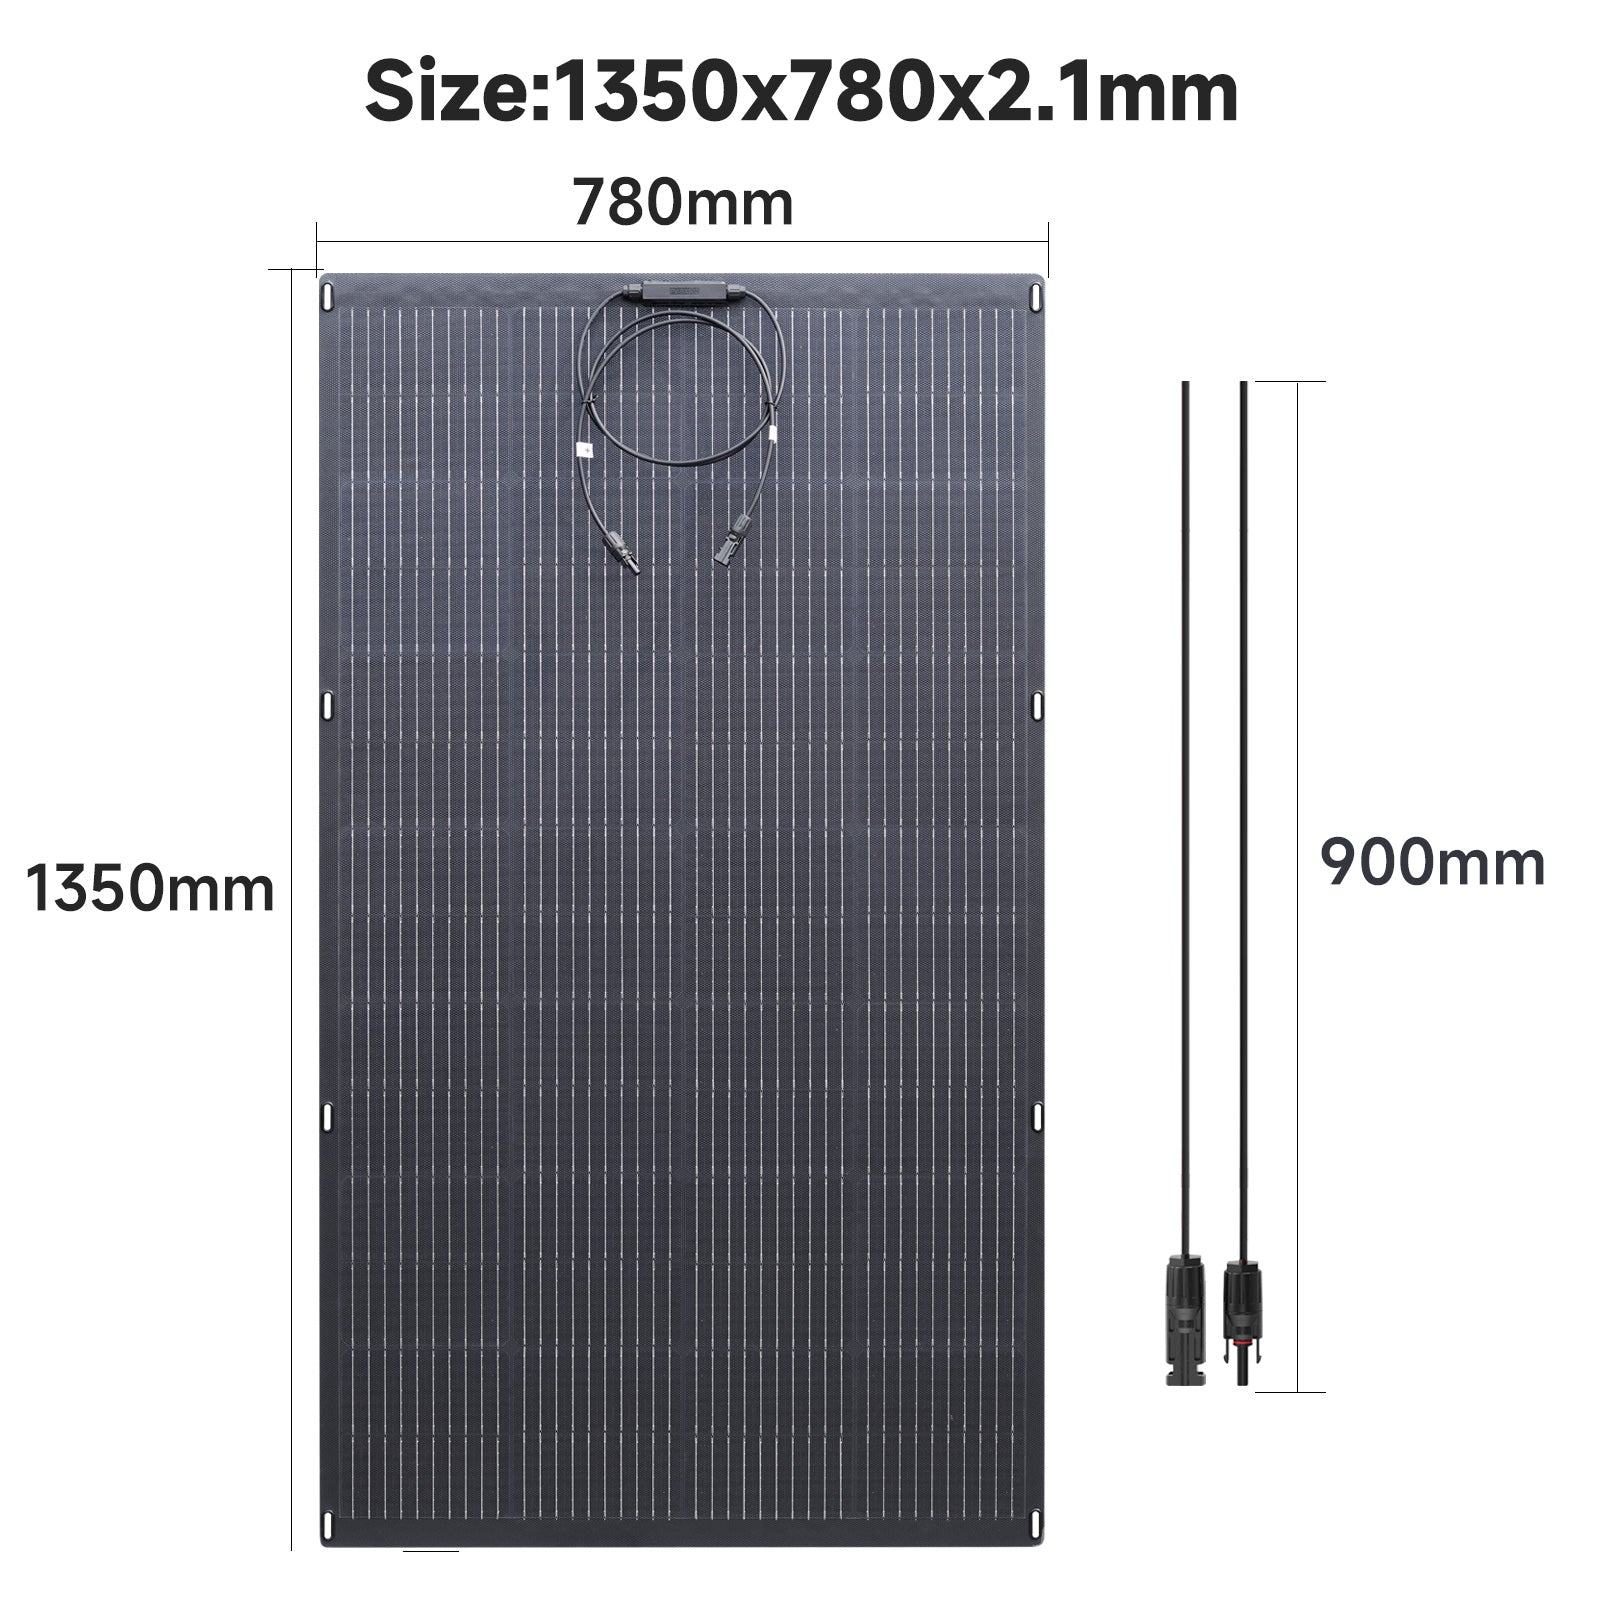 ALLPOWERS Solar Generator Kit 2500W (R2500 + SF200 200W Flexible Solar Panel)